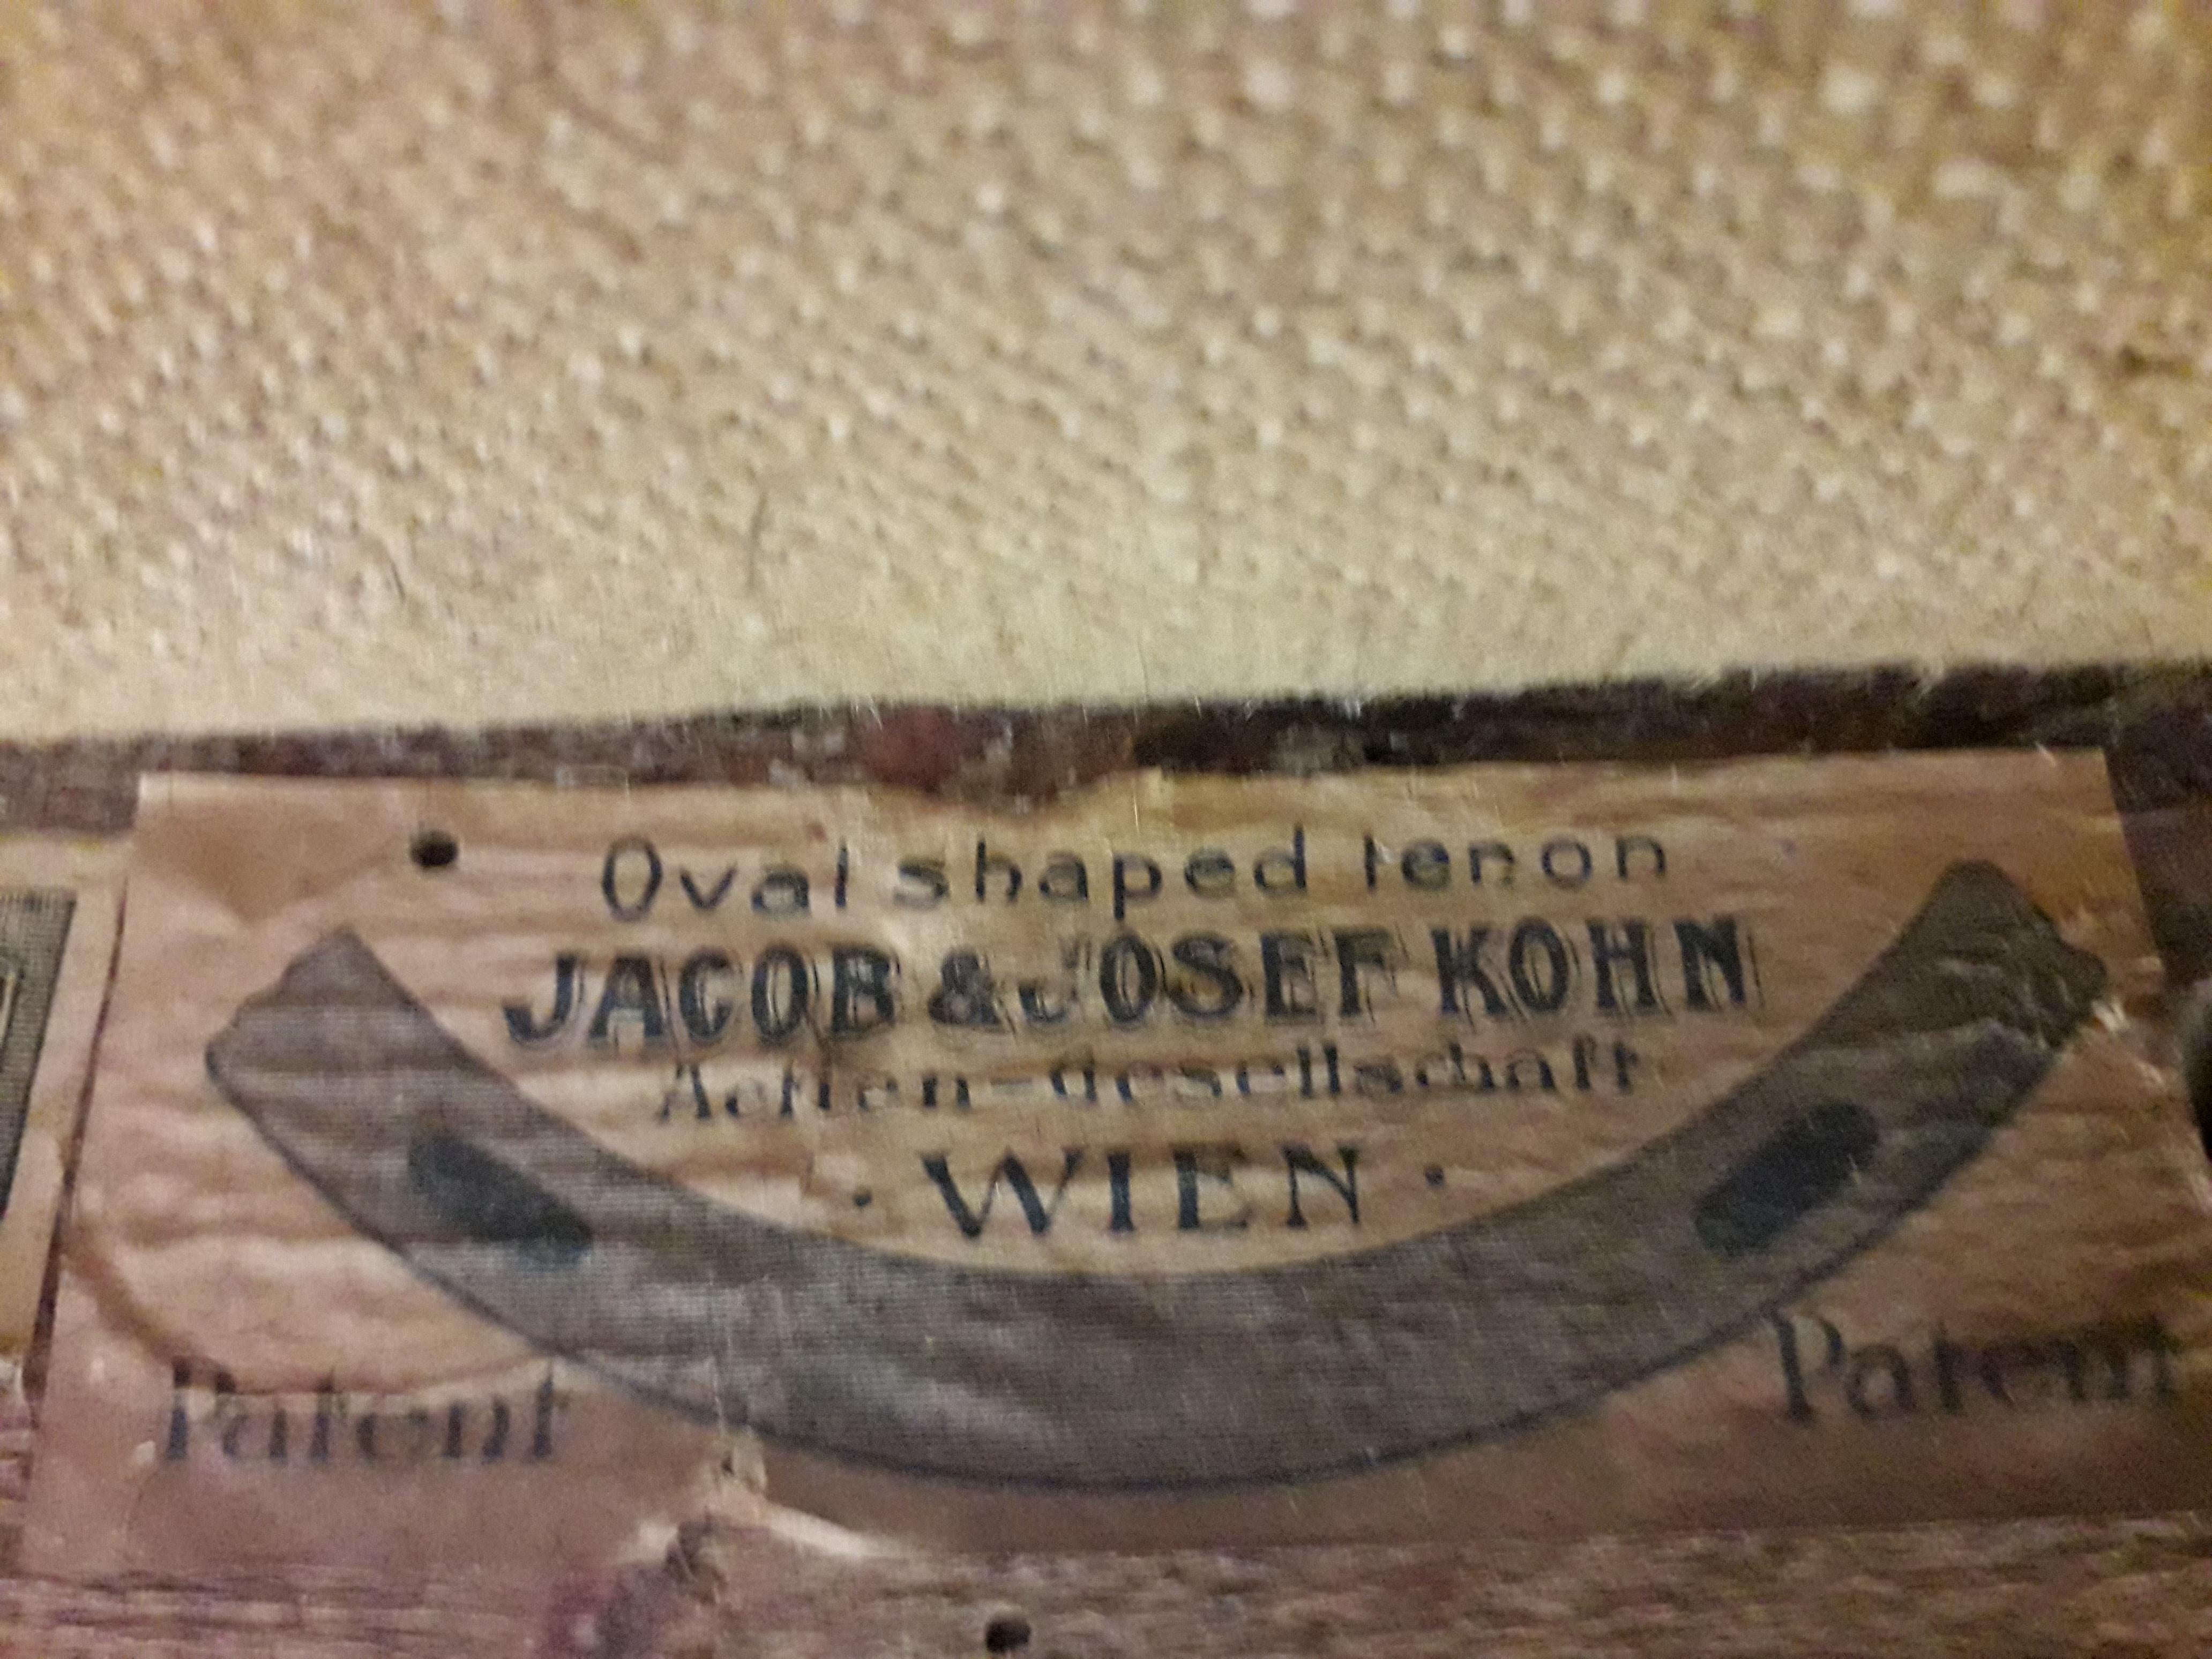 Arch. Gustav Siegel, J.&J. Kohn, Rare Parlor with Patent 13